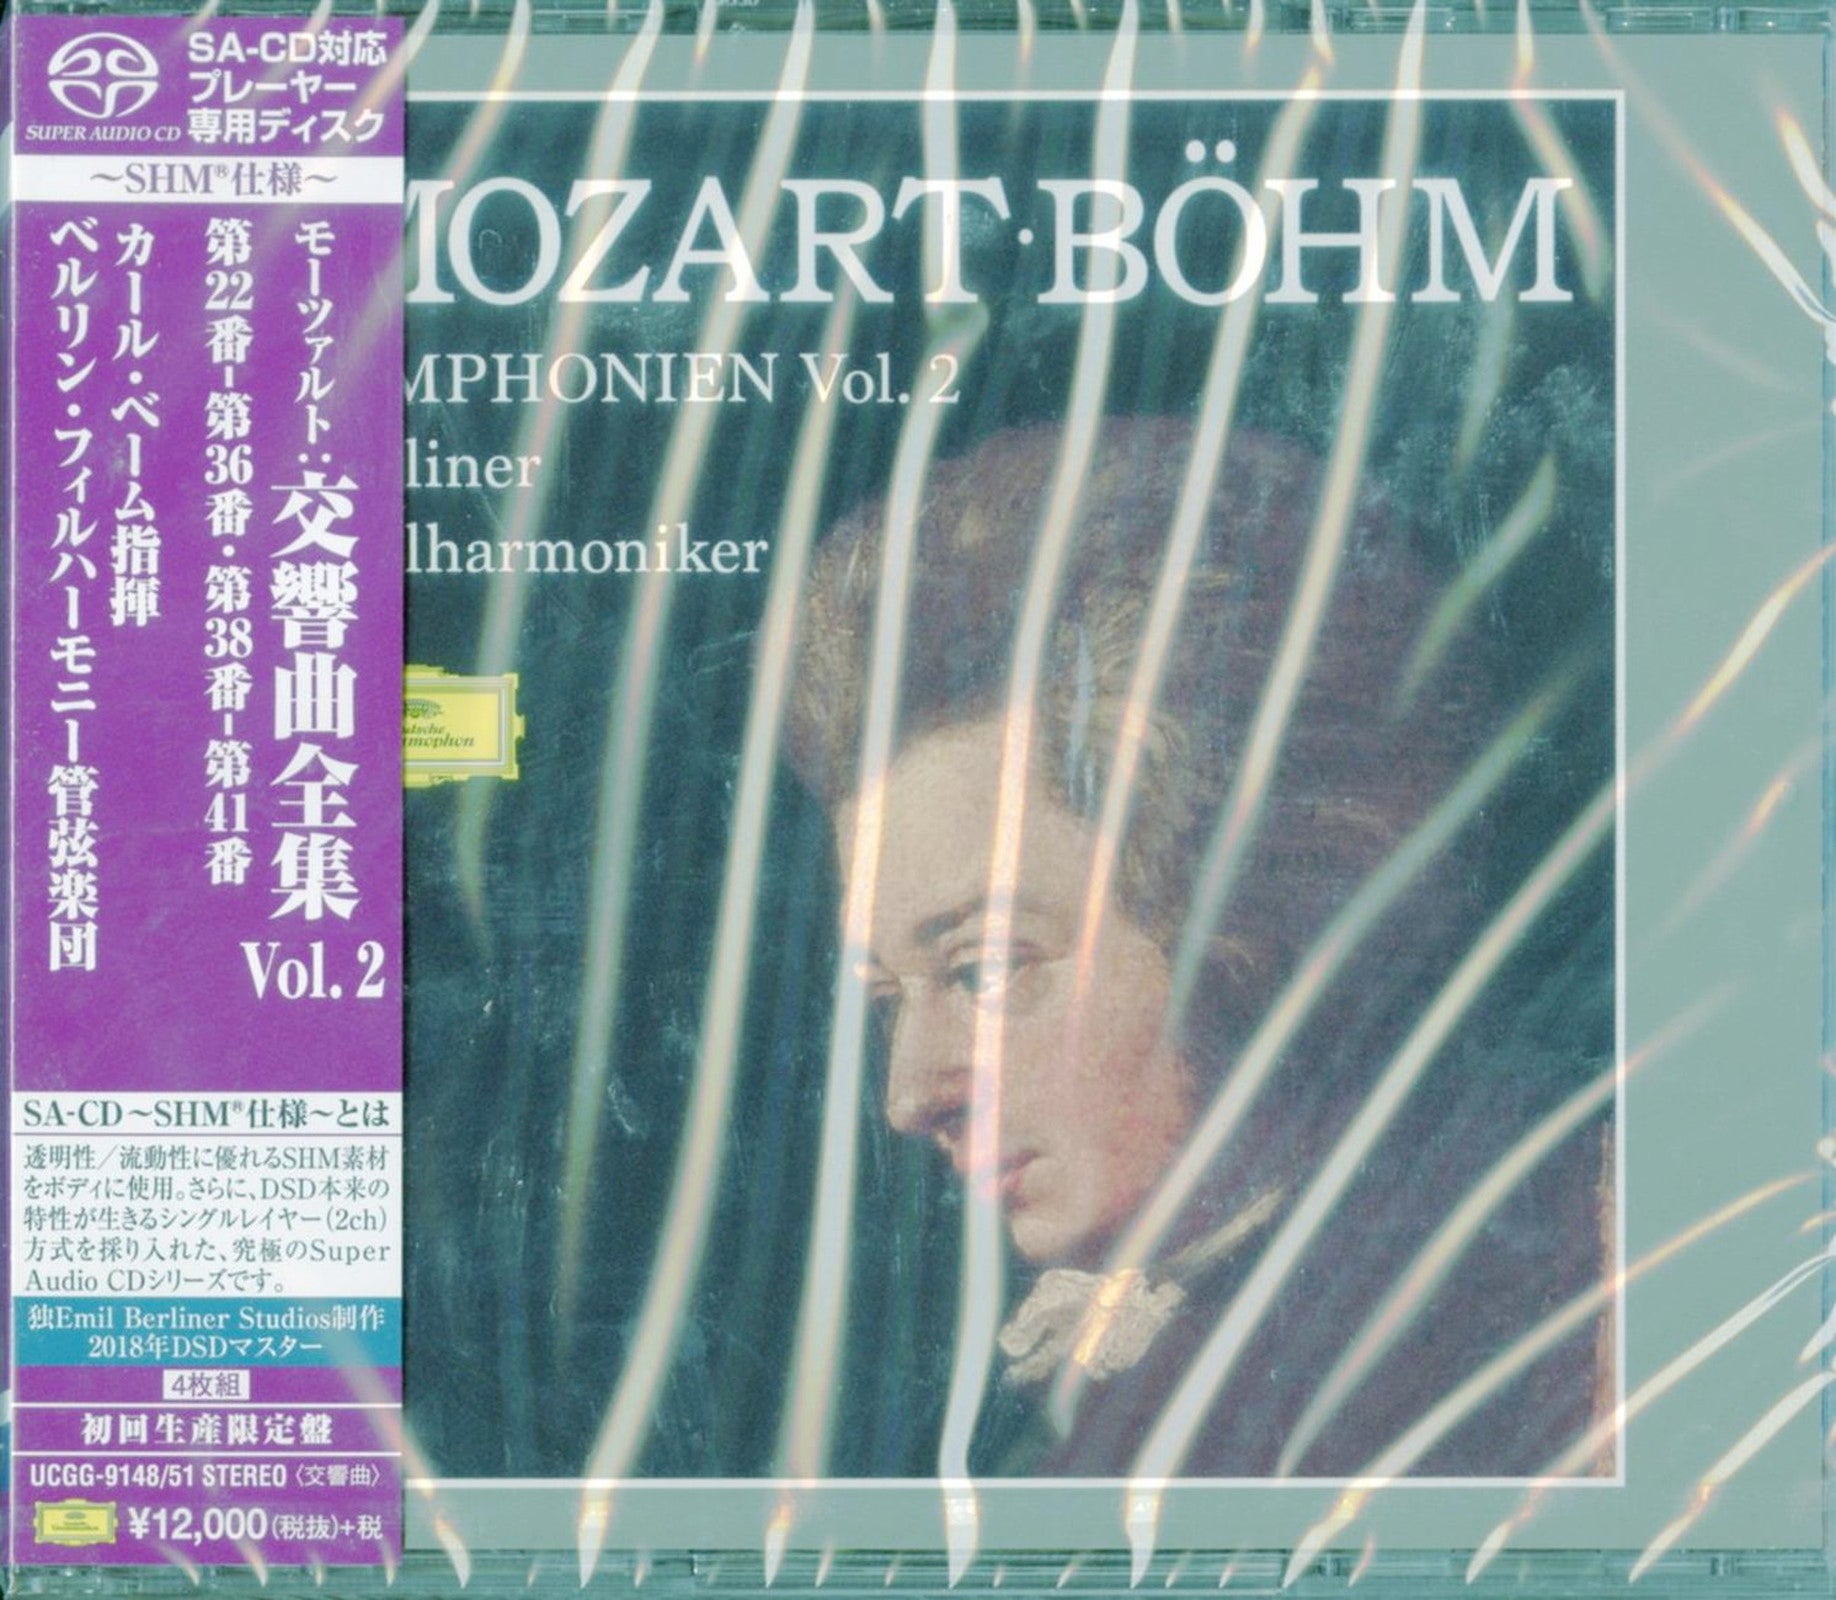 Karl Bohm - Mozart: Symphonies Vol.2 - Japan 4 SHM-SACD Limited Editio –  CDs Vinyl Japan Store